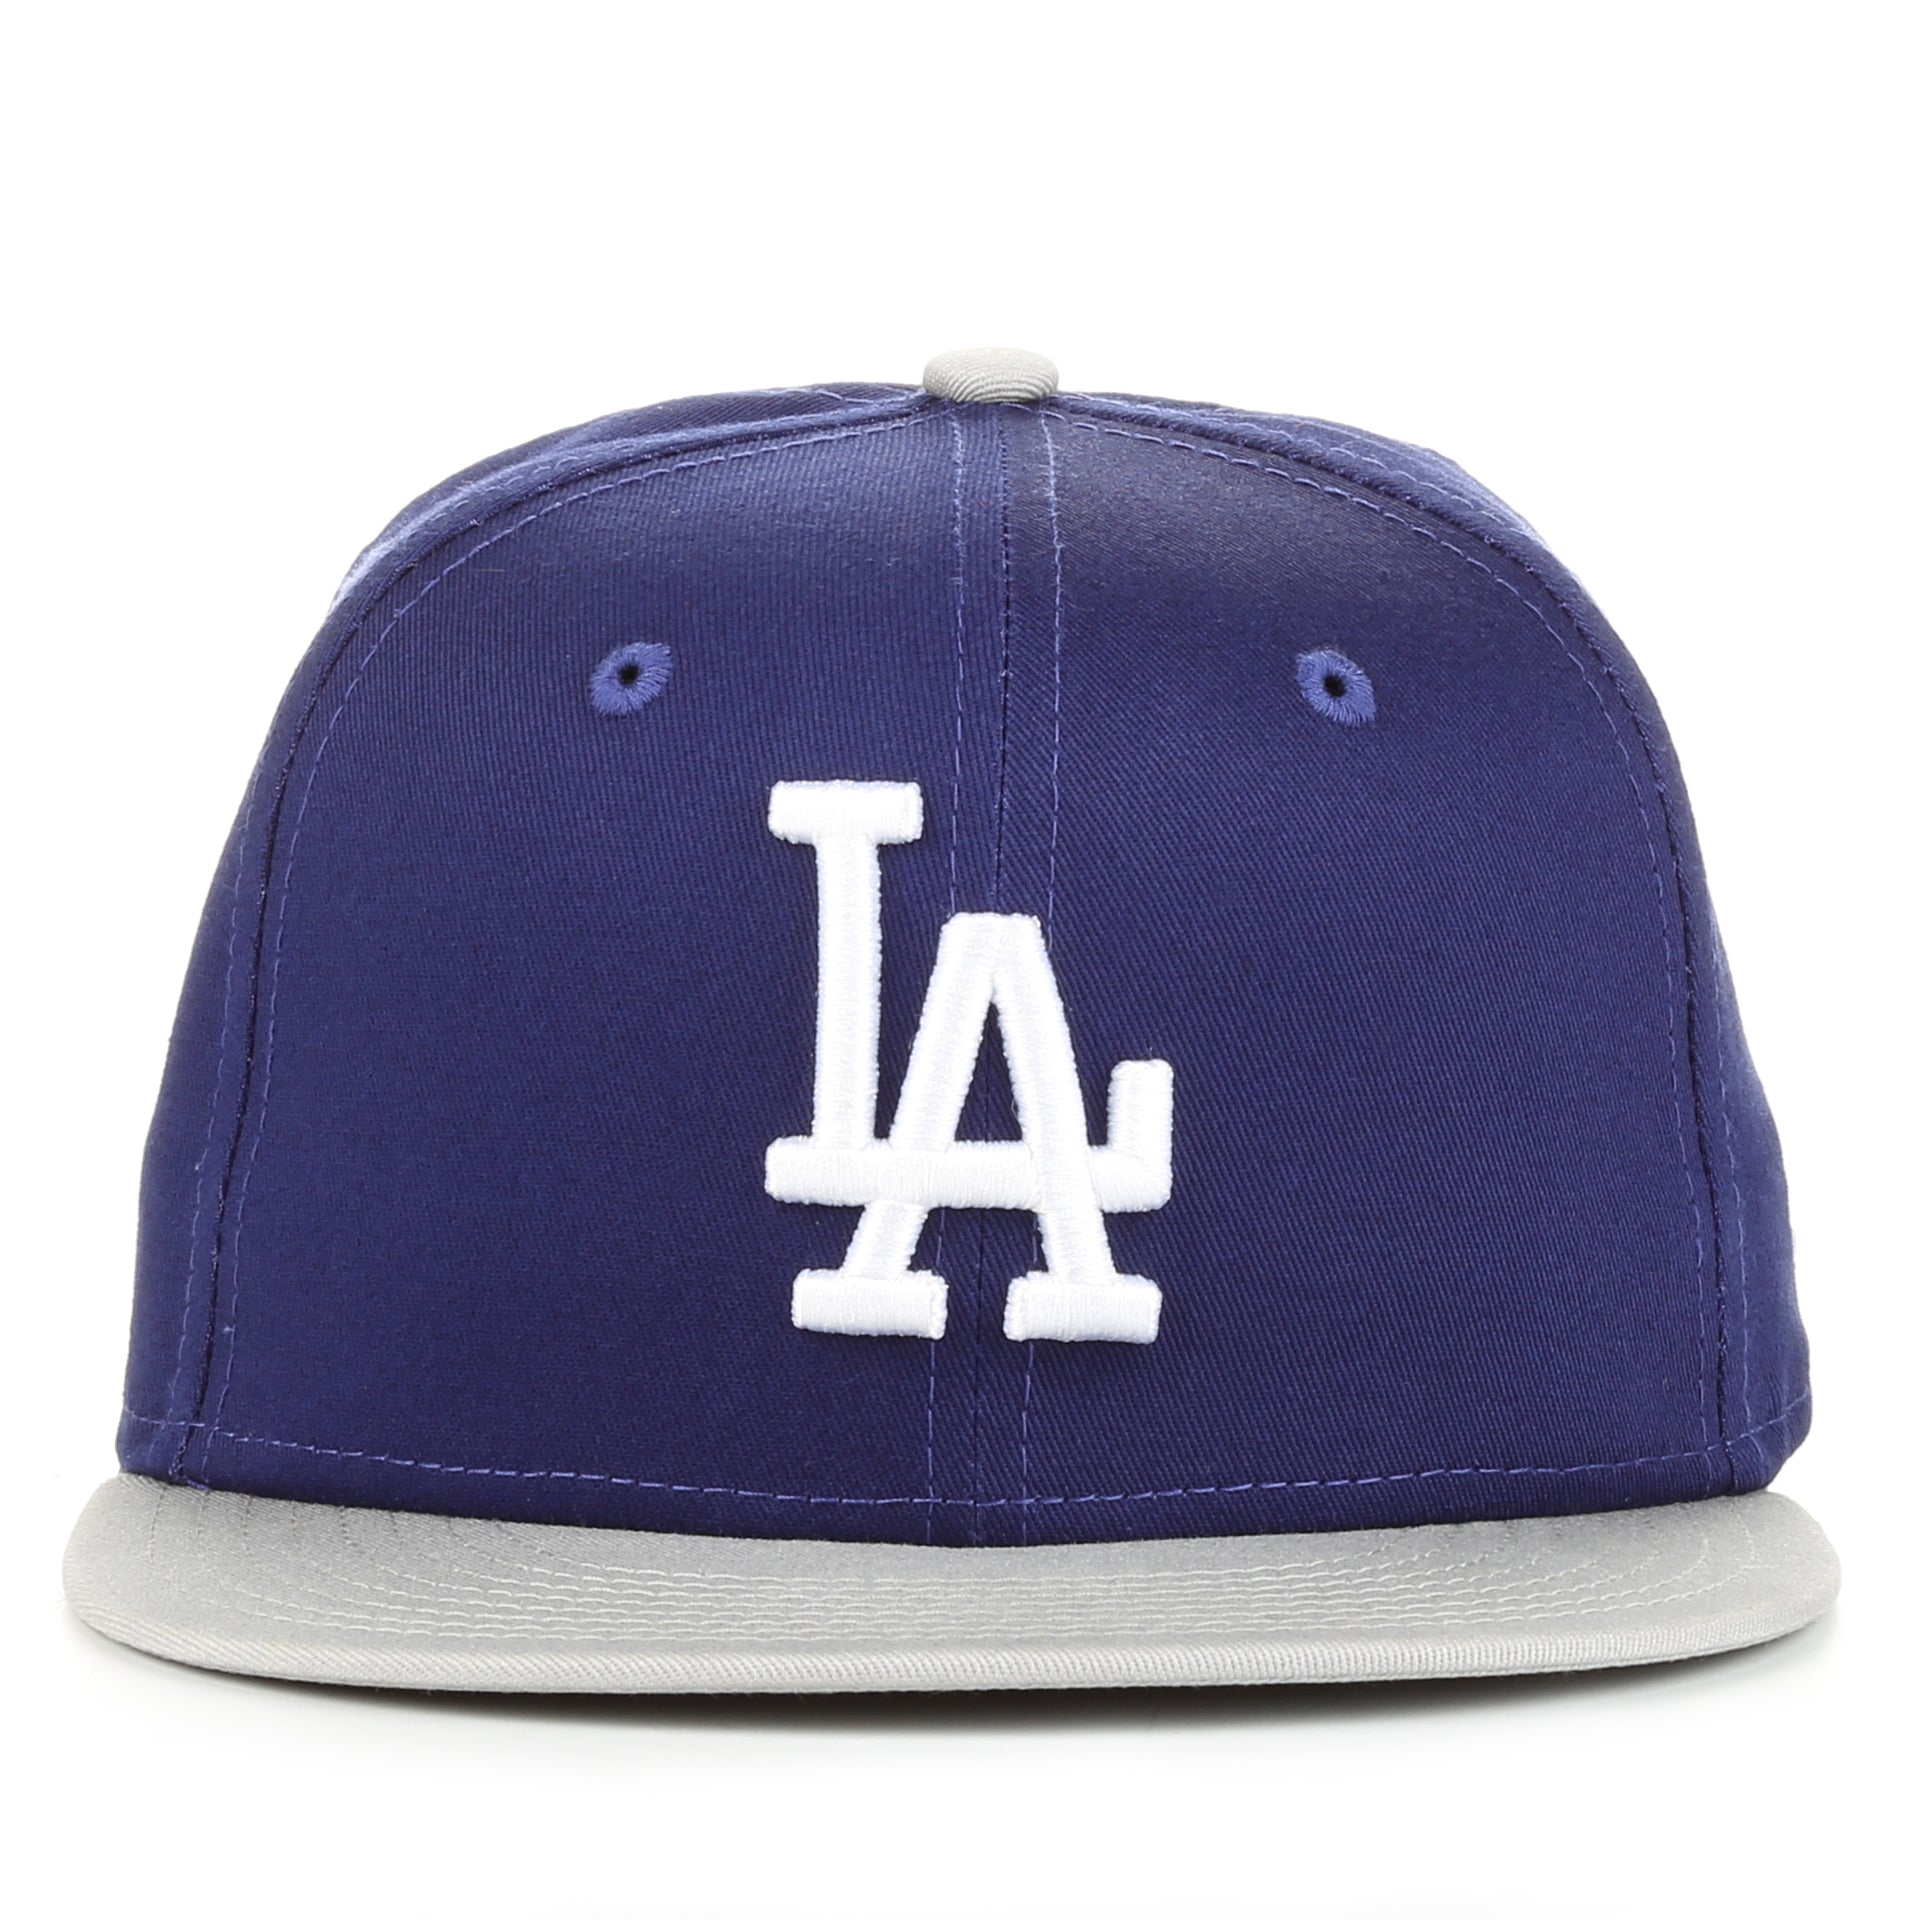 New Era 9Fifty Kids Two Tone MLB Basic Cap - Los Angeles Dodgers/Blue - New  Star